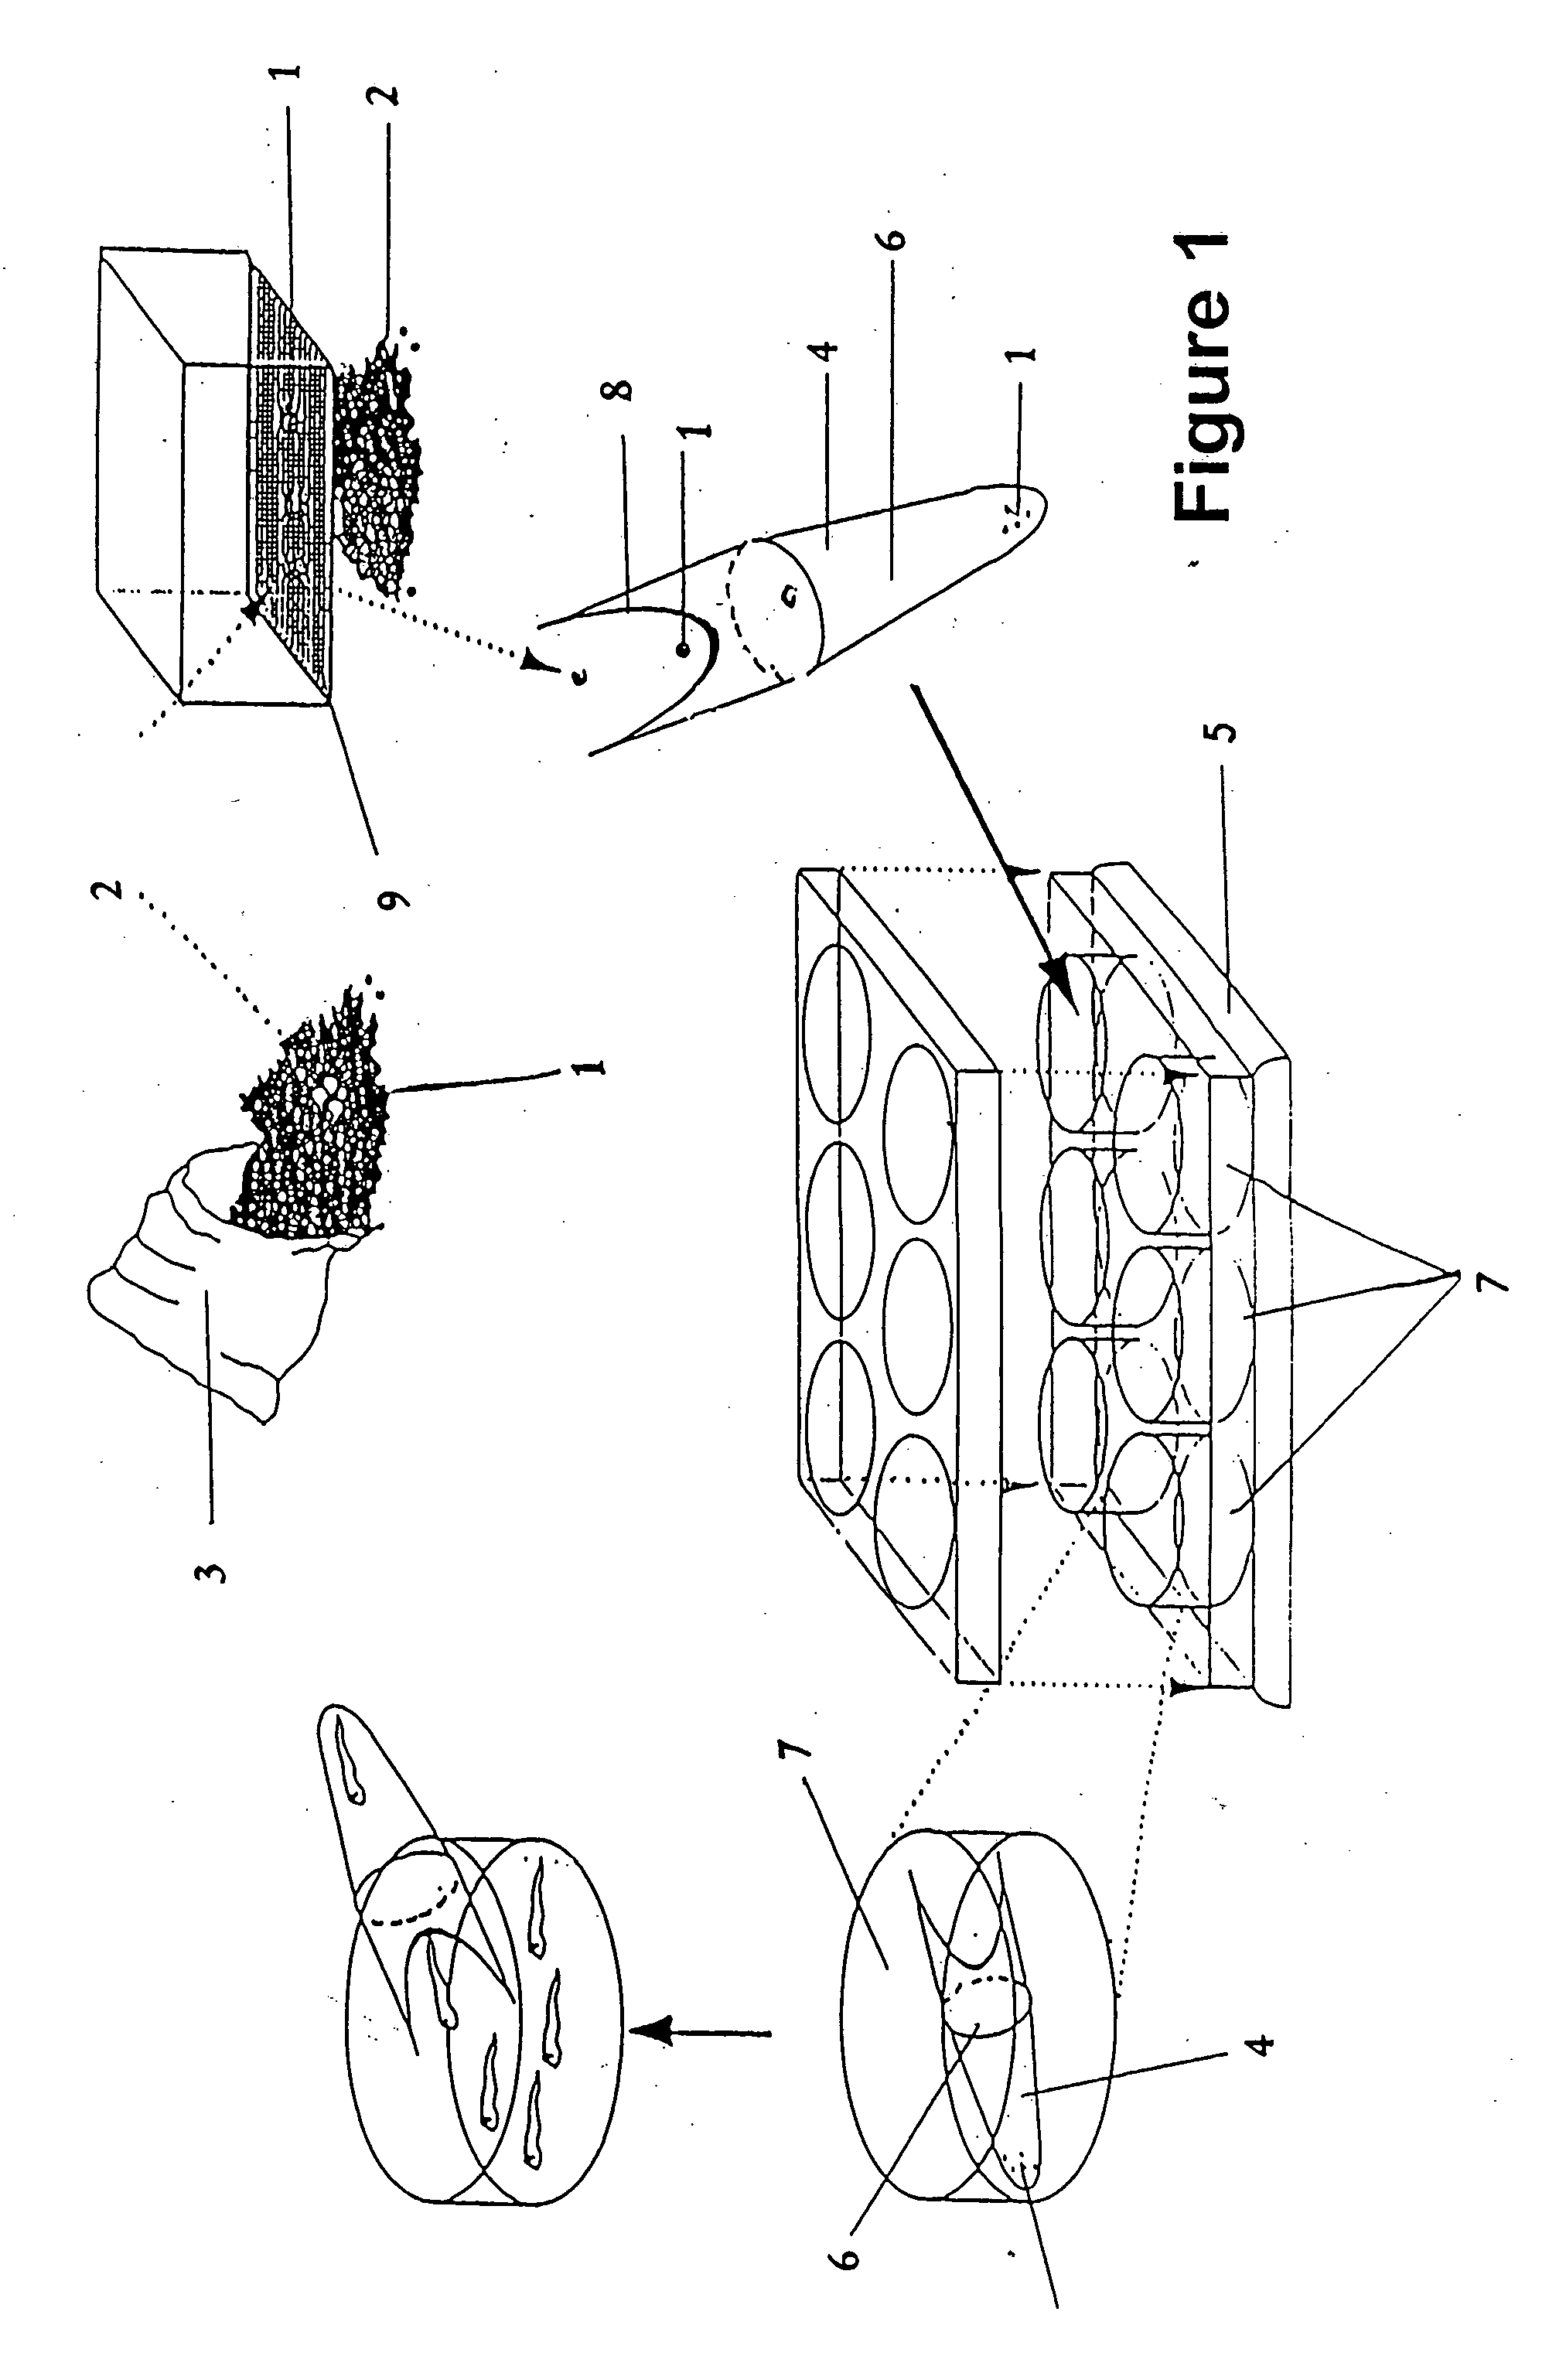 Fish hatching method and apparatus